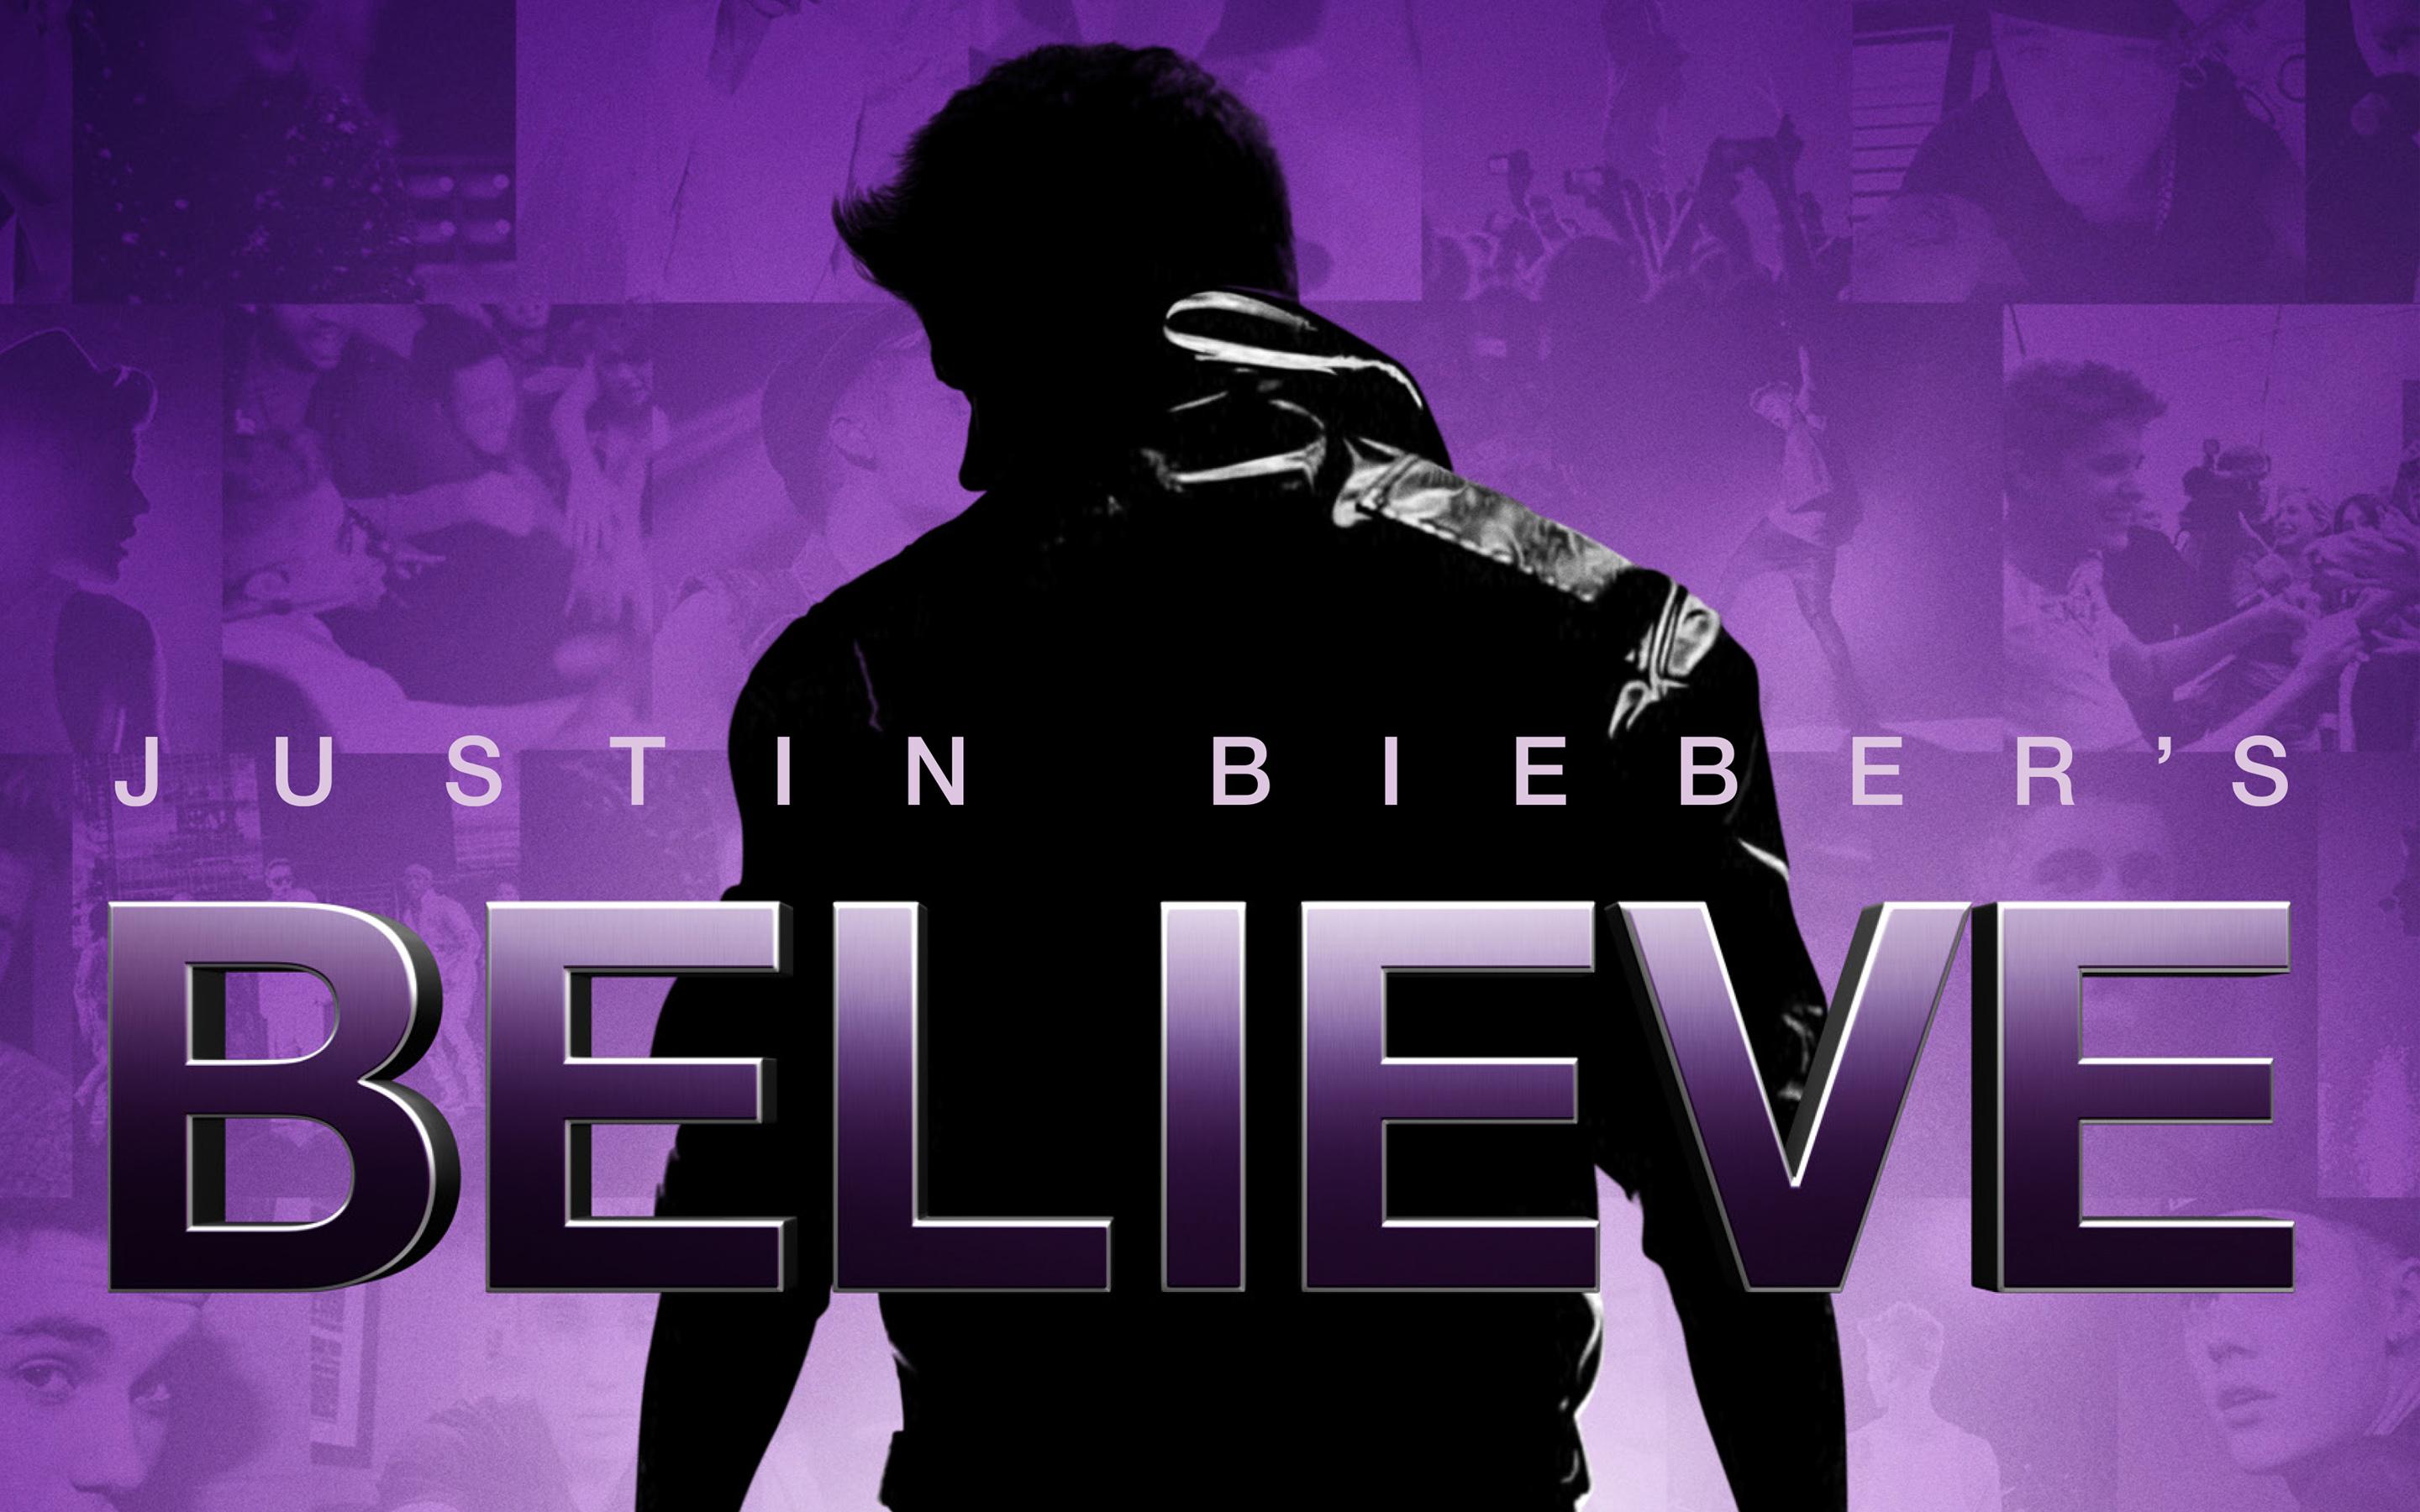 Justin Bieber’s Believe Movie 2013 HD Wallpaper Image Background